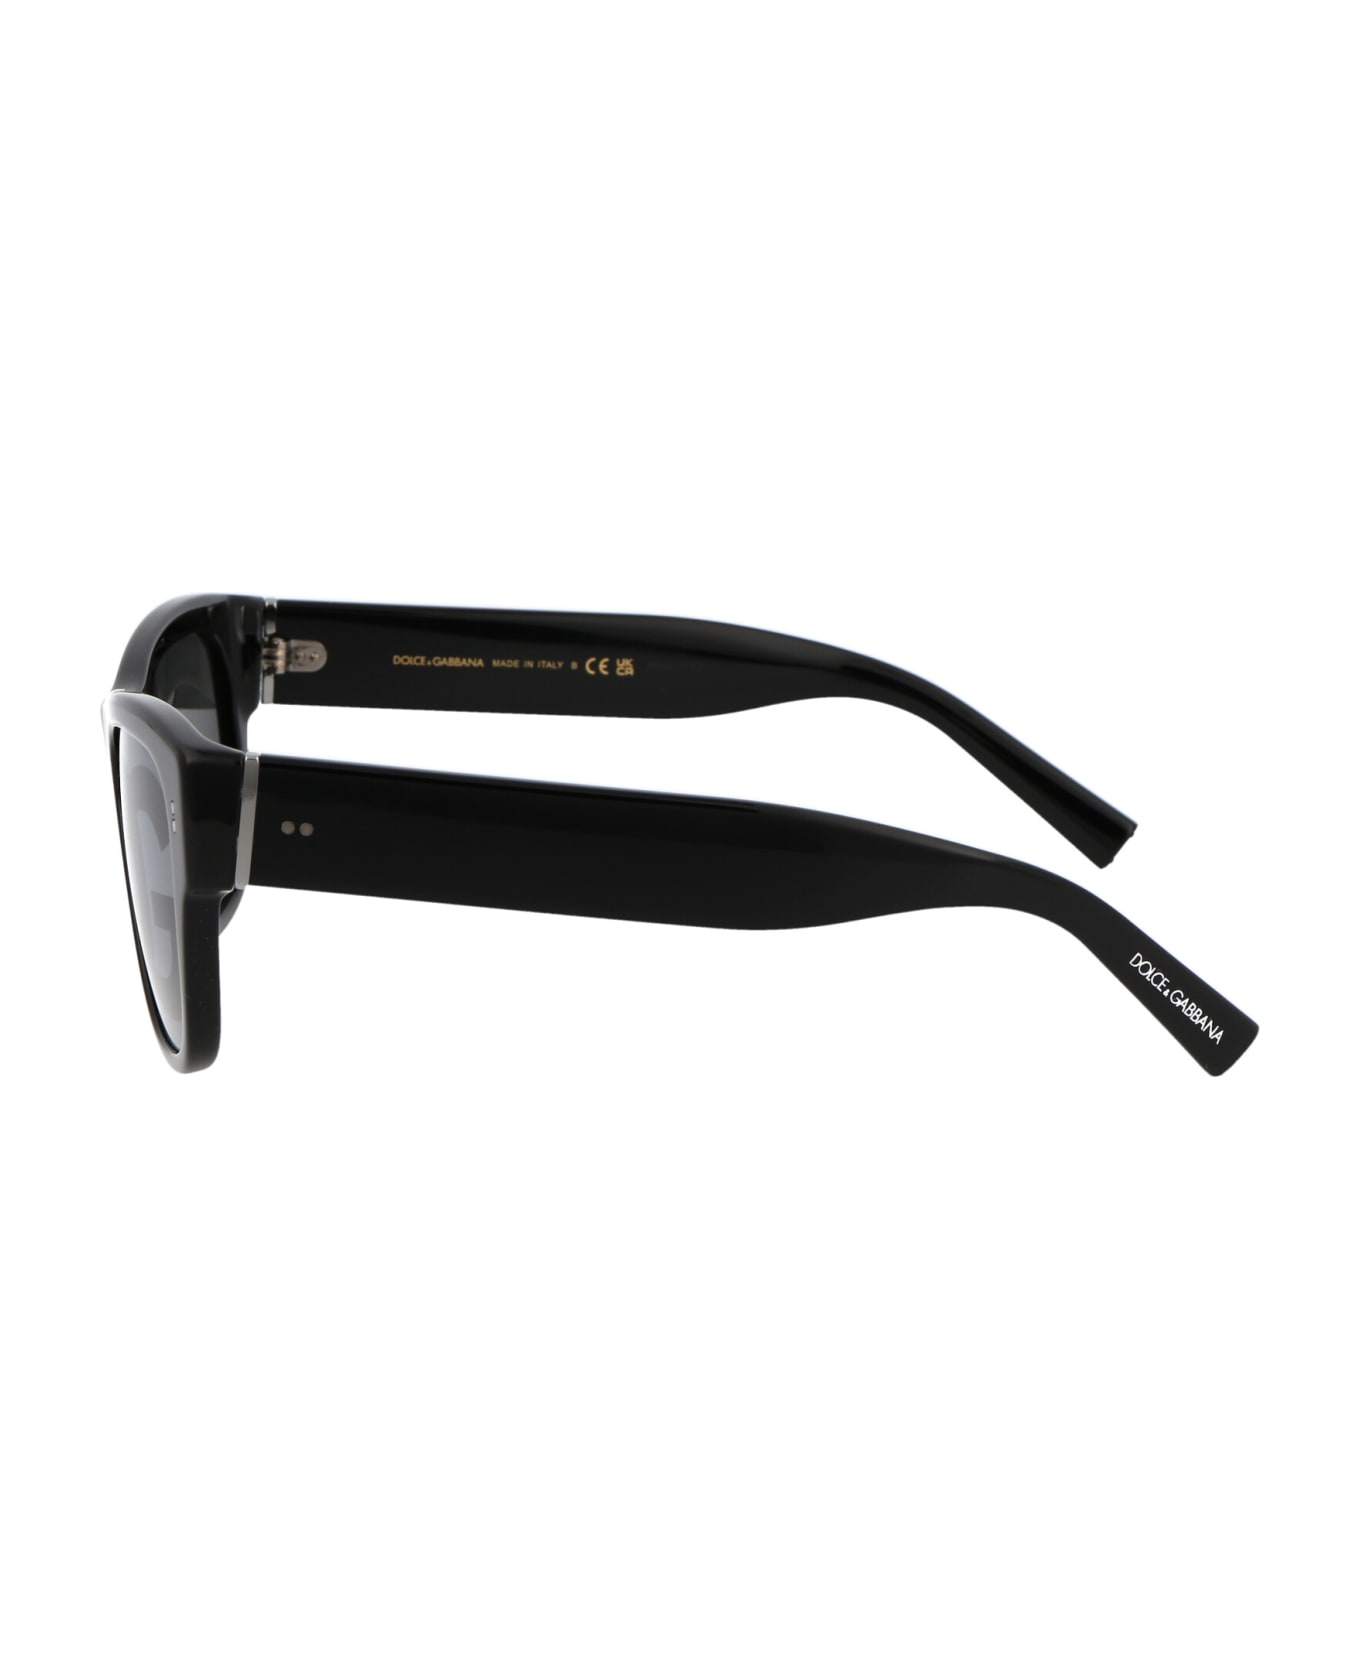 Dolce & Gabbana Eyewear 0dg4338 Sunglasses - 501/M BLACK